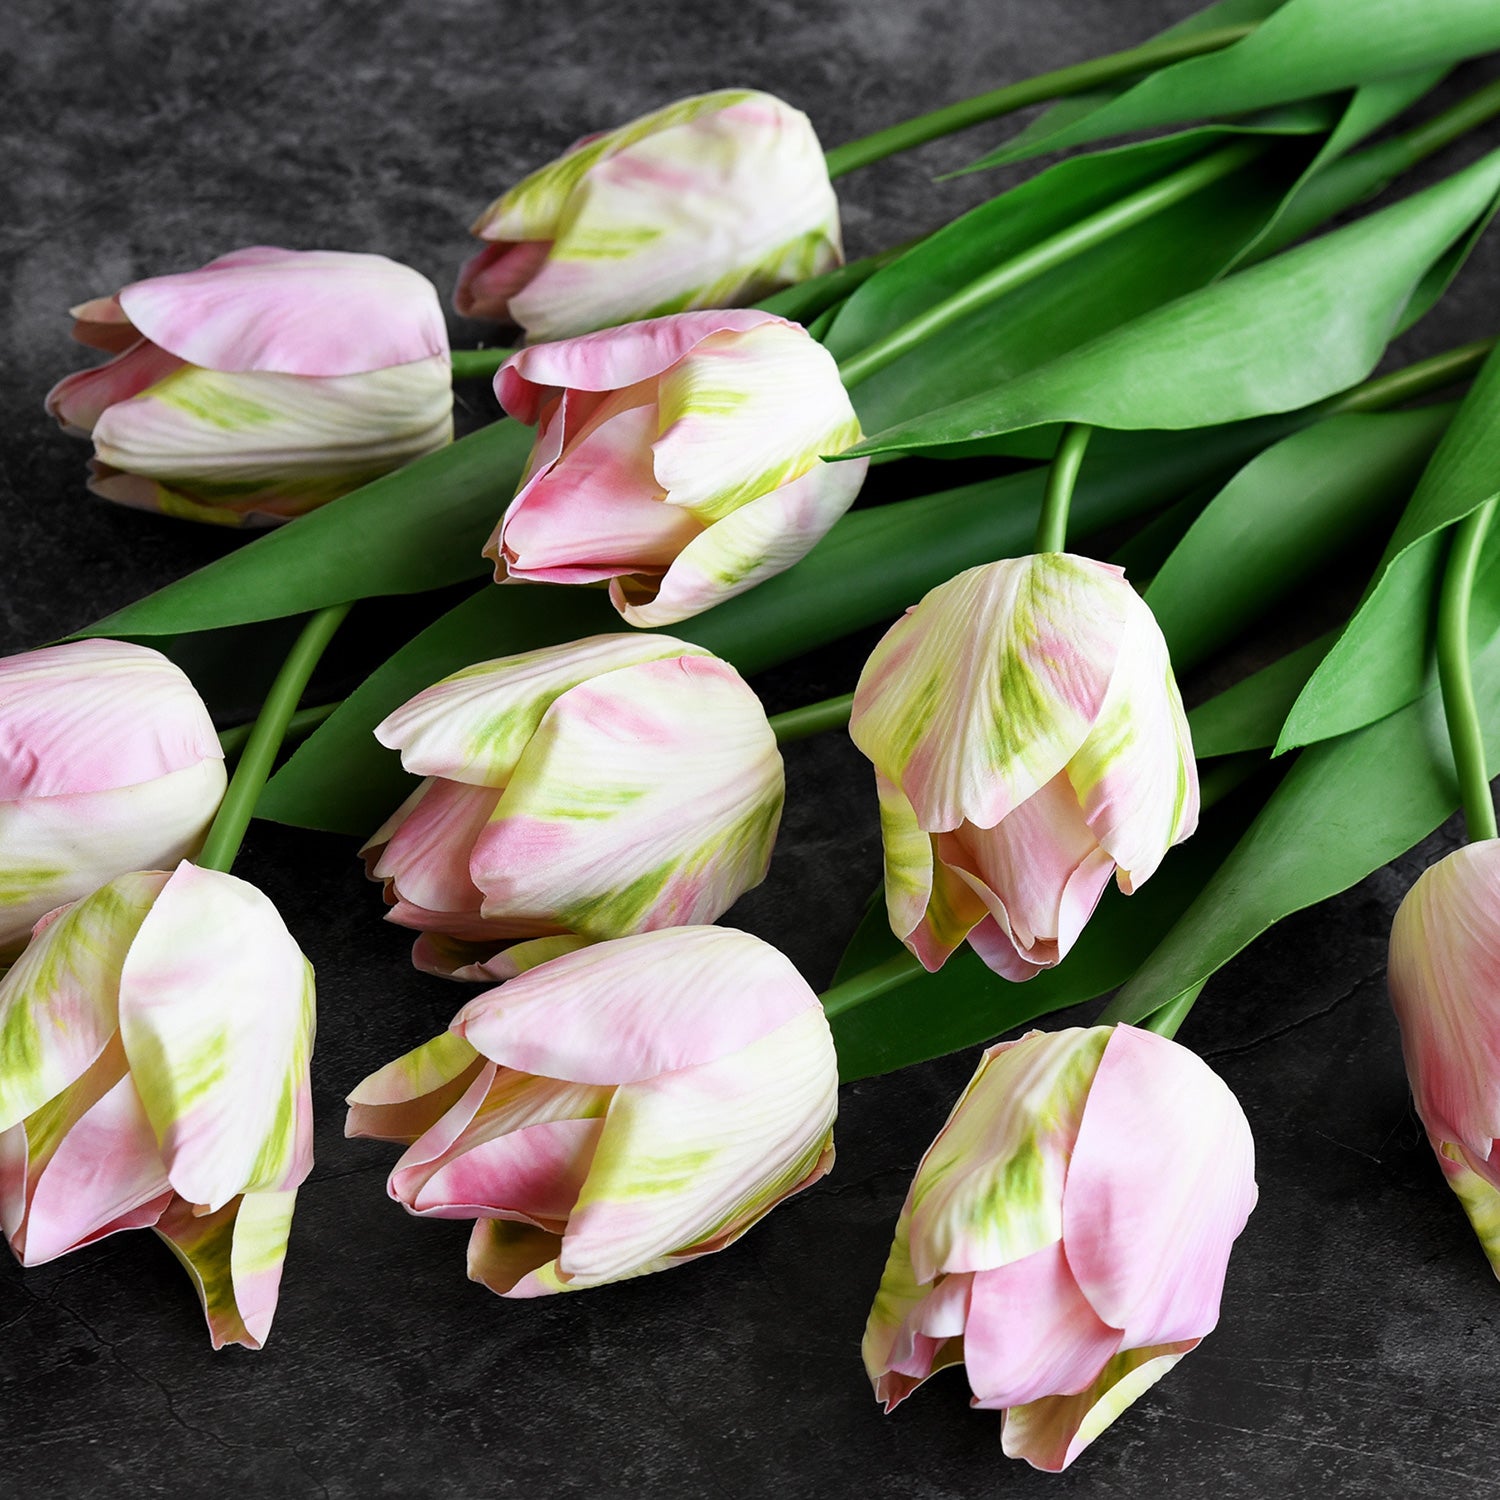 FiveSeasonStuff Real Touch Long Stems Parrot Tulips Artificial Flowers Bouquet [3D Printed] (Meadow Pink) 10 Stems